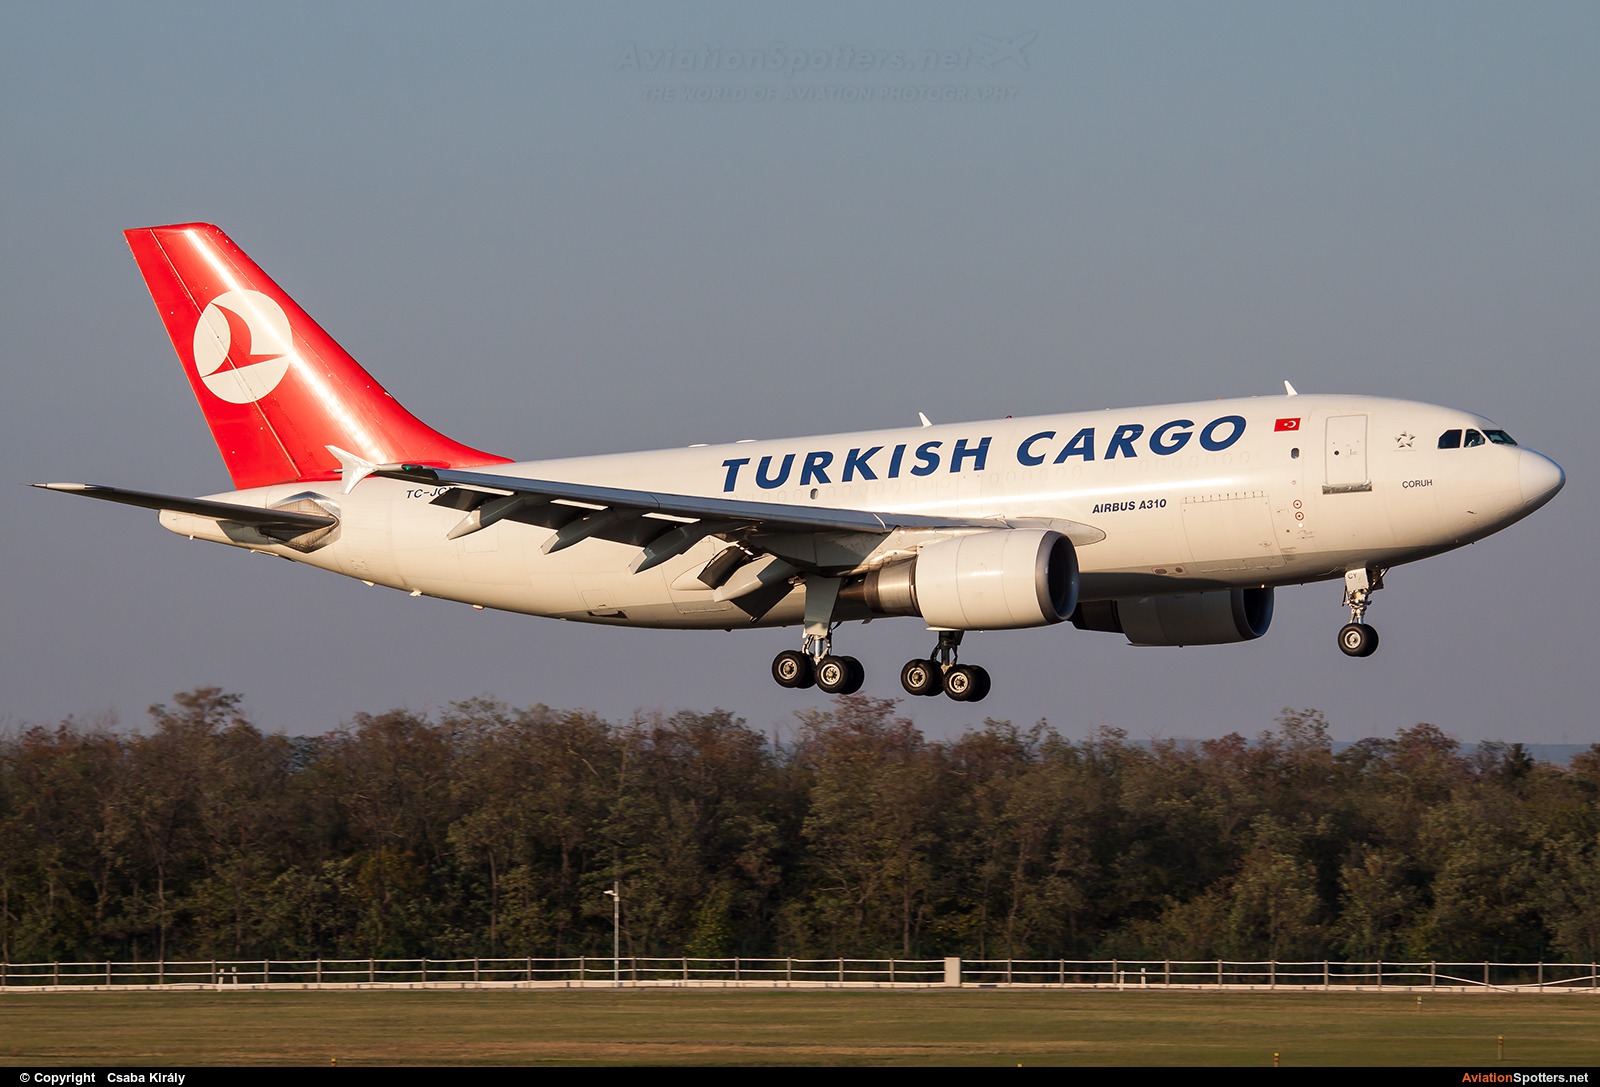 Turkish Airlines Cargo  -  A310F  (TC-JCY) By Csaba Király (Csaba Kiraly)